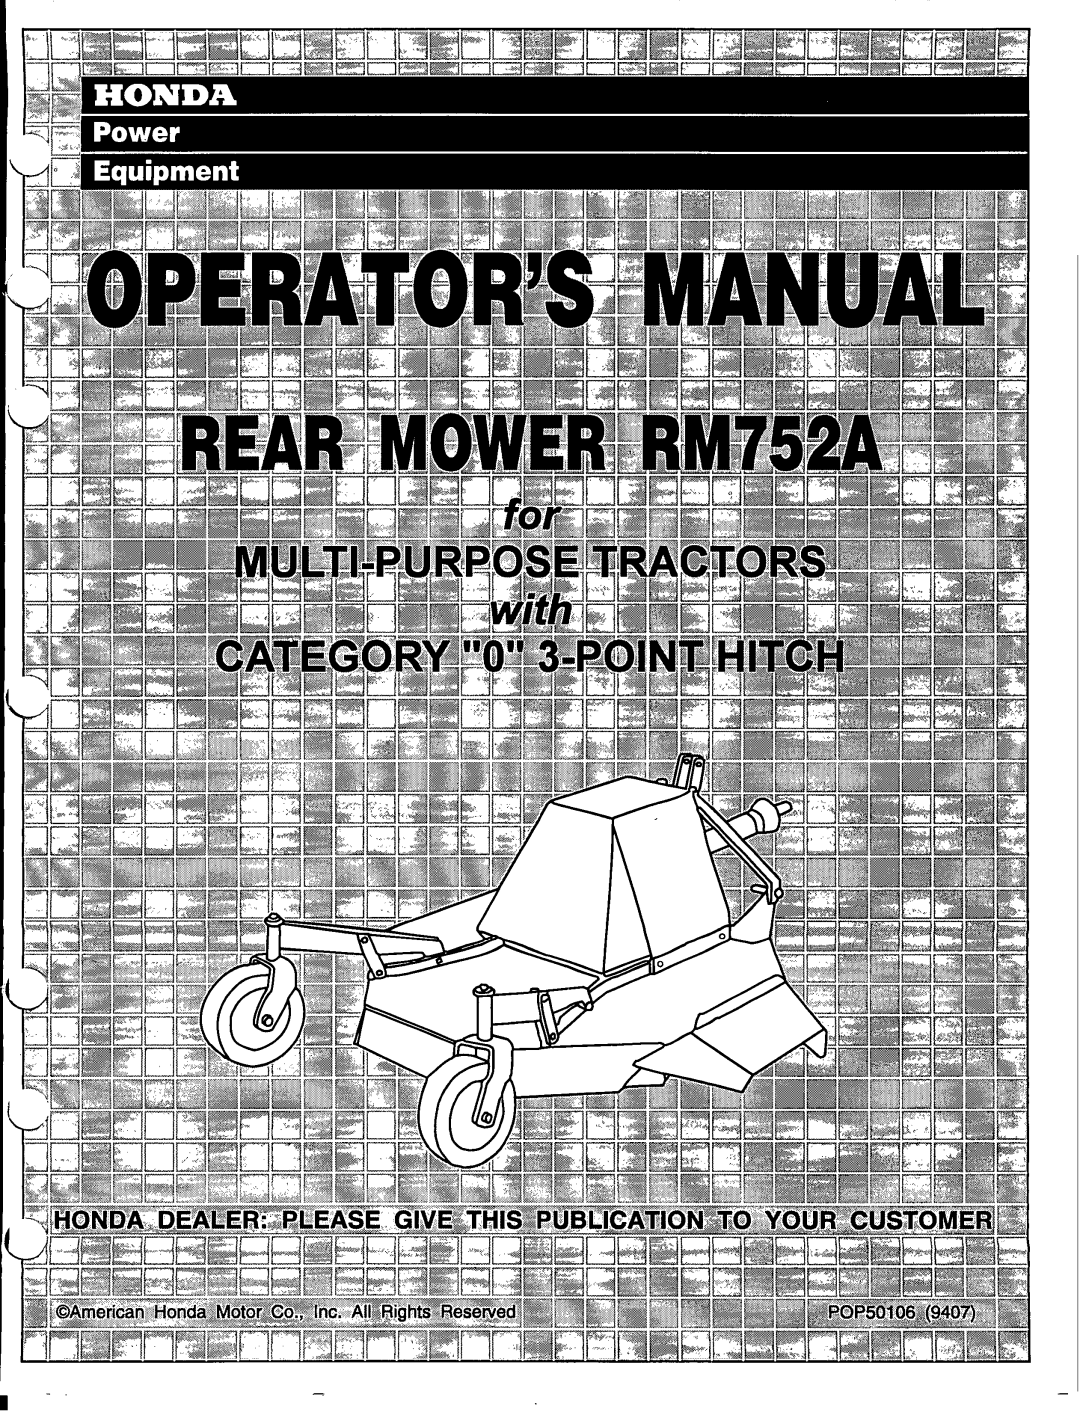 Honda Power Equipment RM752A manual 